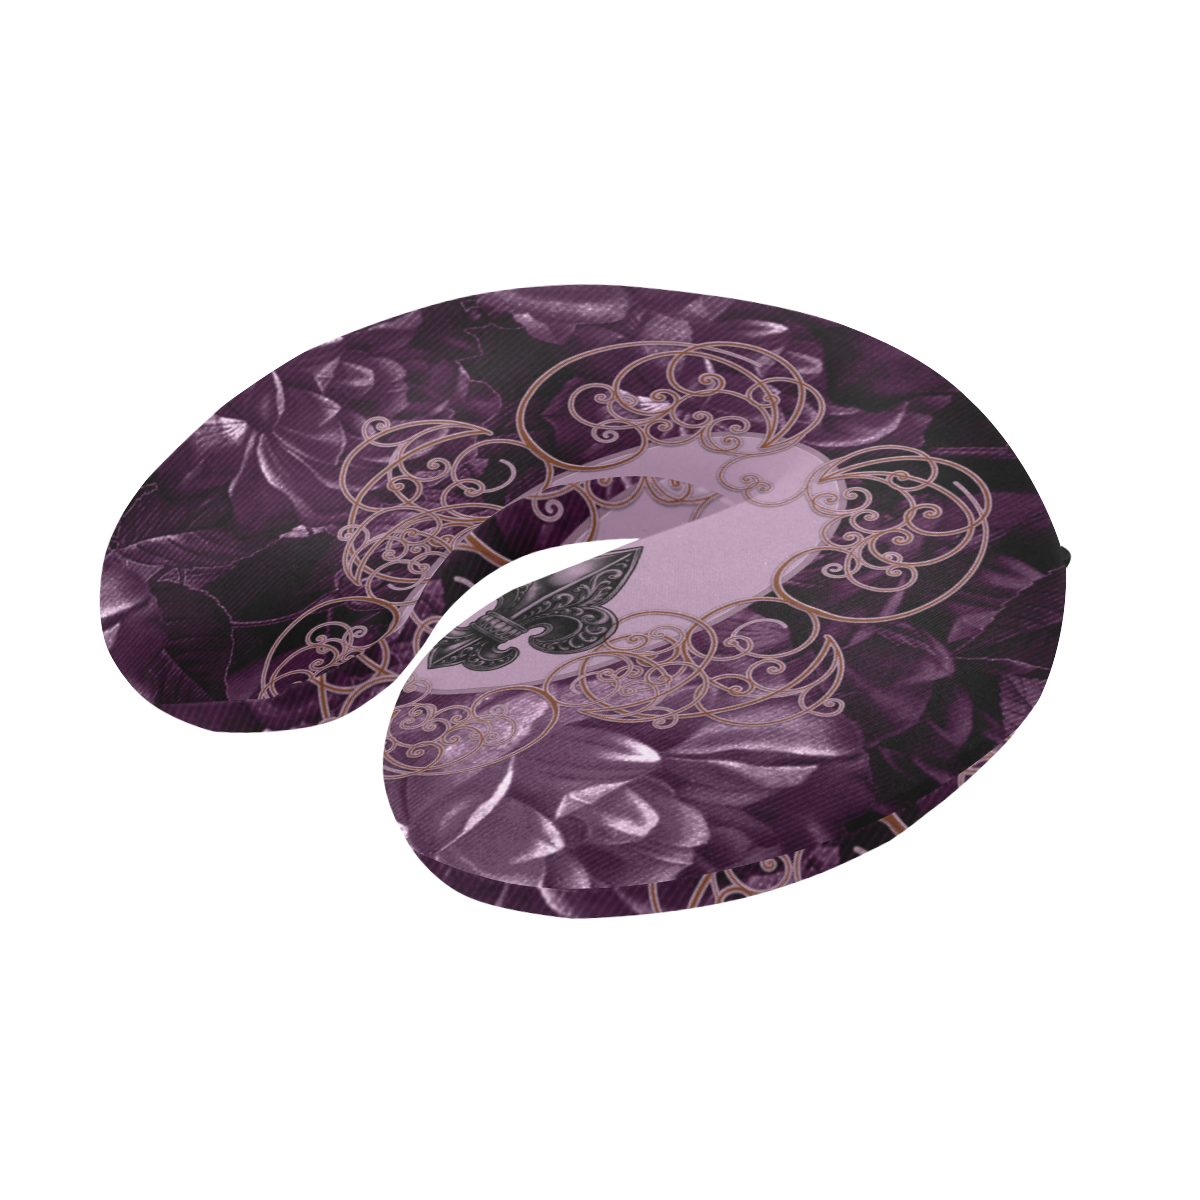 Flowers in soft violet colors U-Shape Travel Pillow